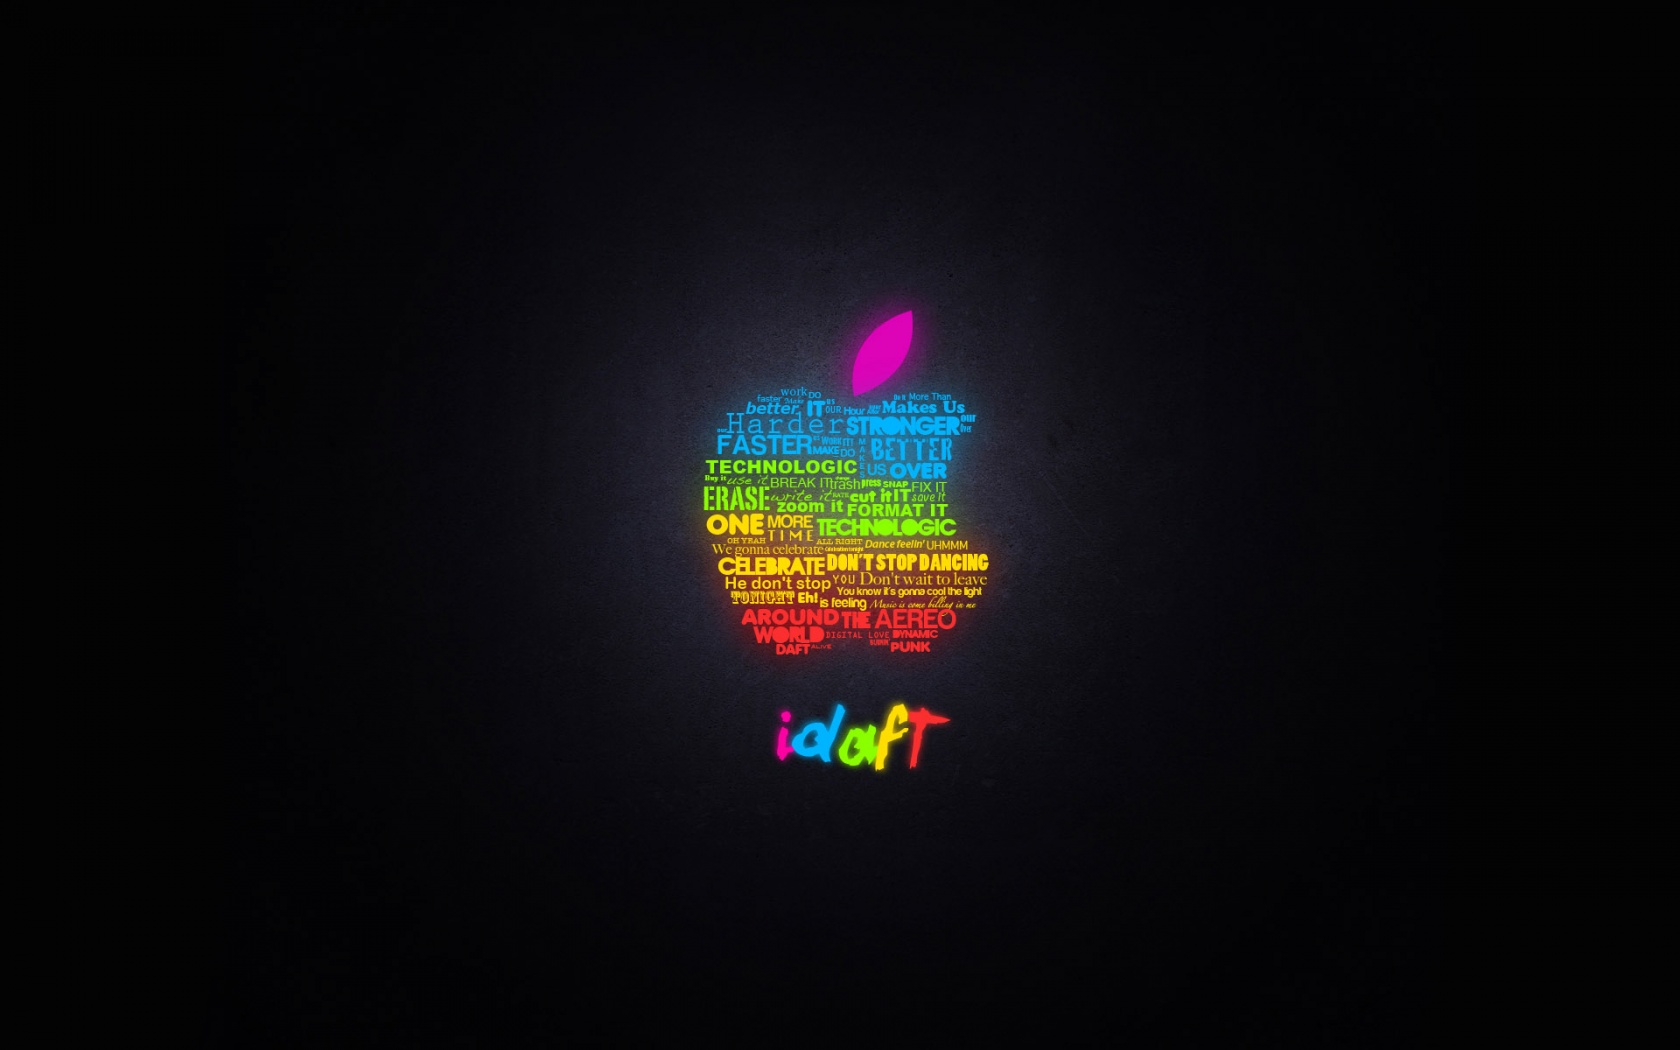 Cool Apple Mac Desktop Wallpaper In